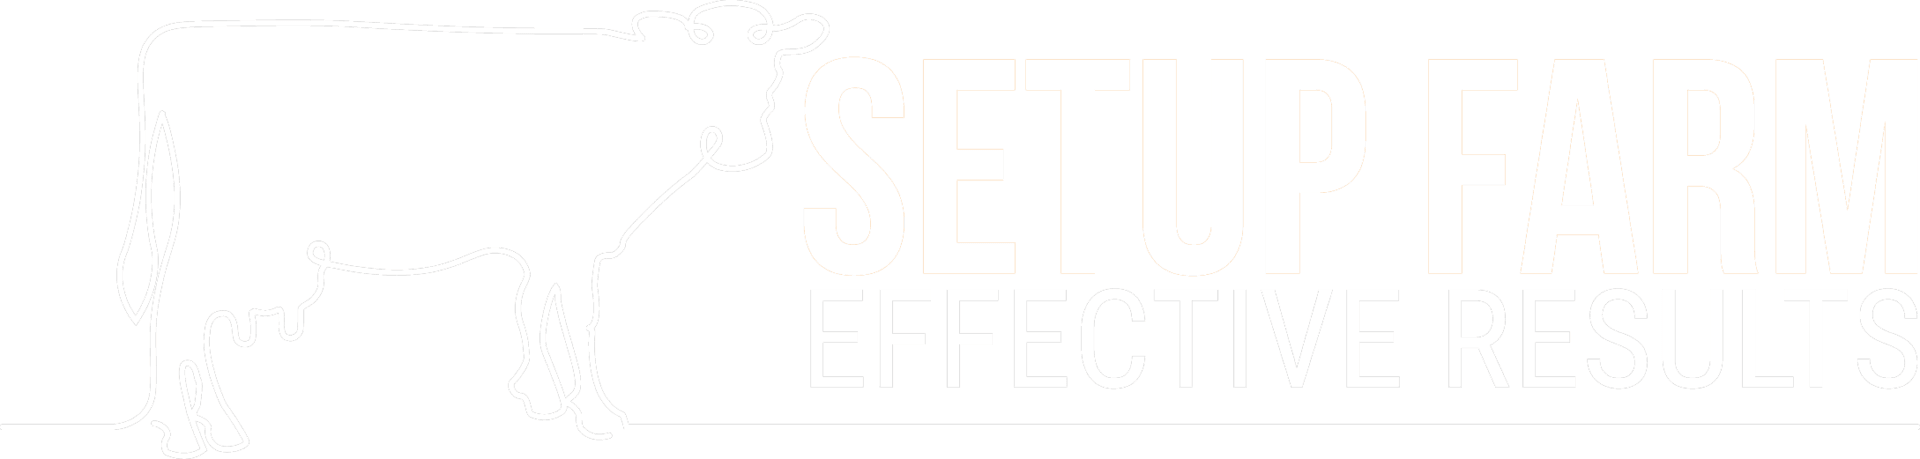 SetUp Farm - Effective Results